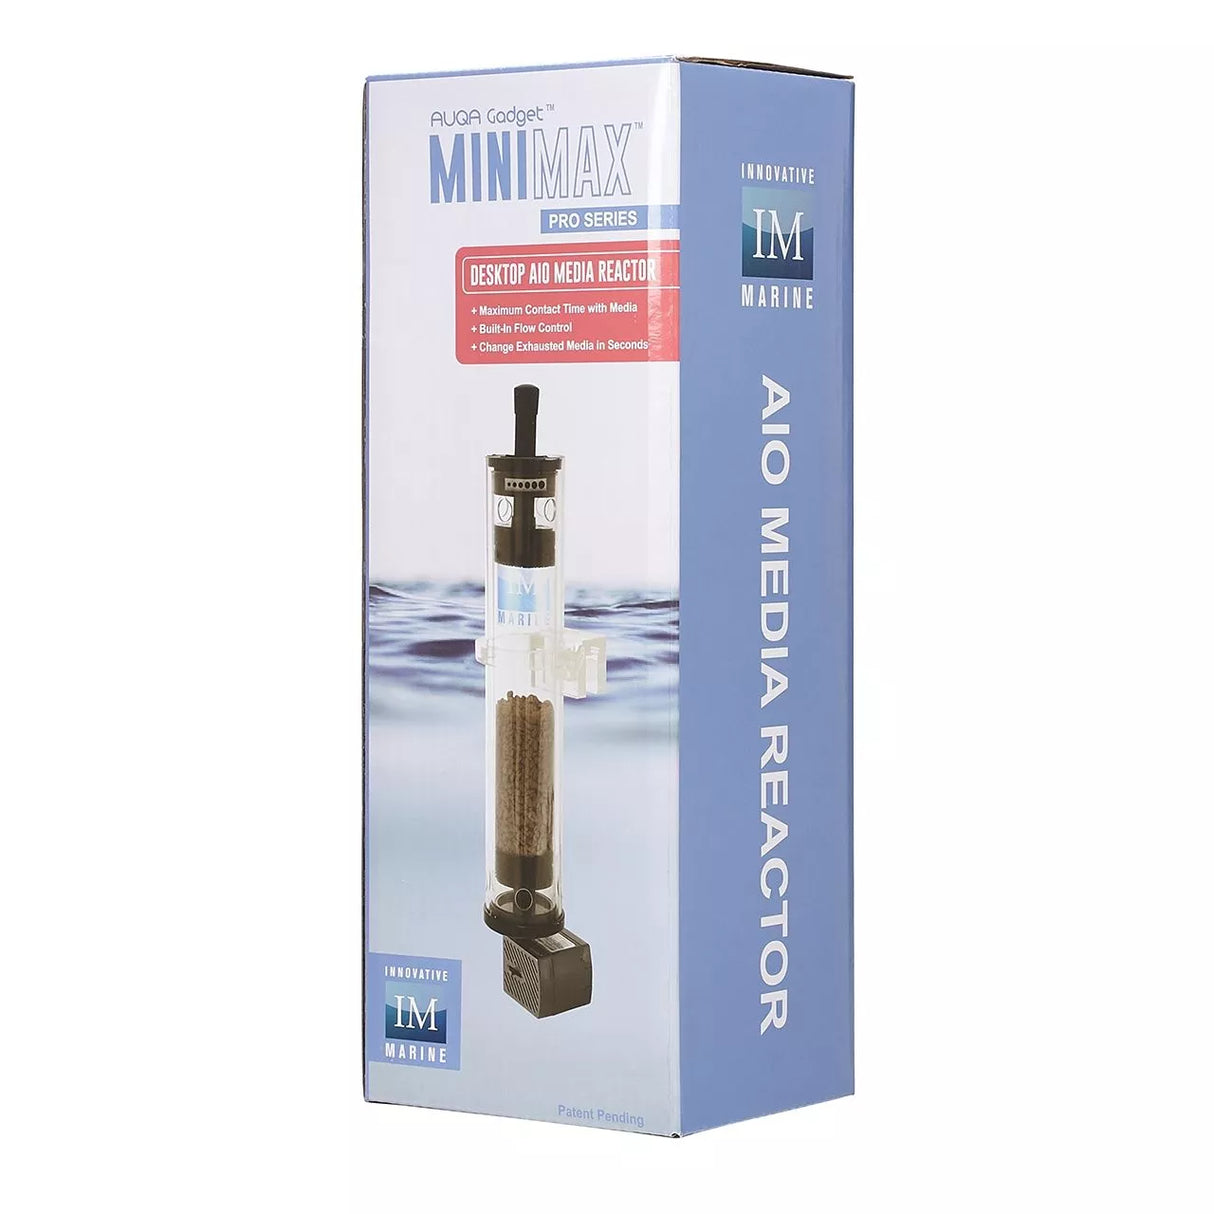 Aqua Gadget Minimax Pro Media Reactor - Innovative Marine - Innovative Marine